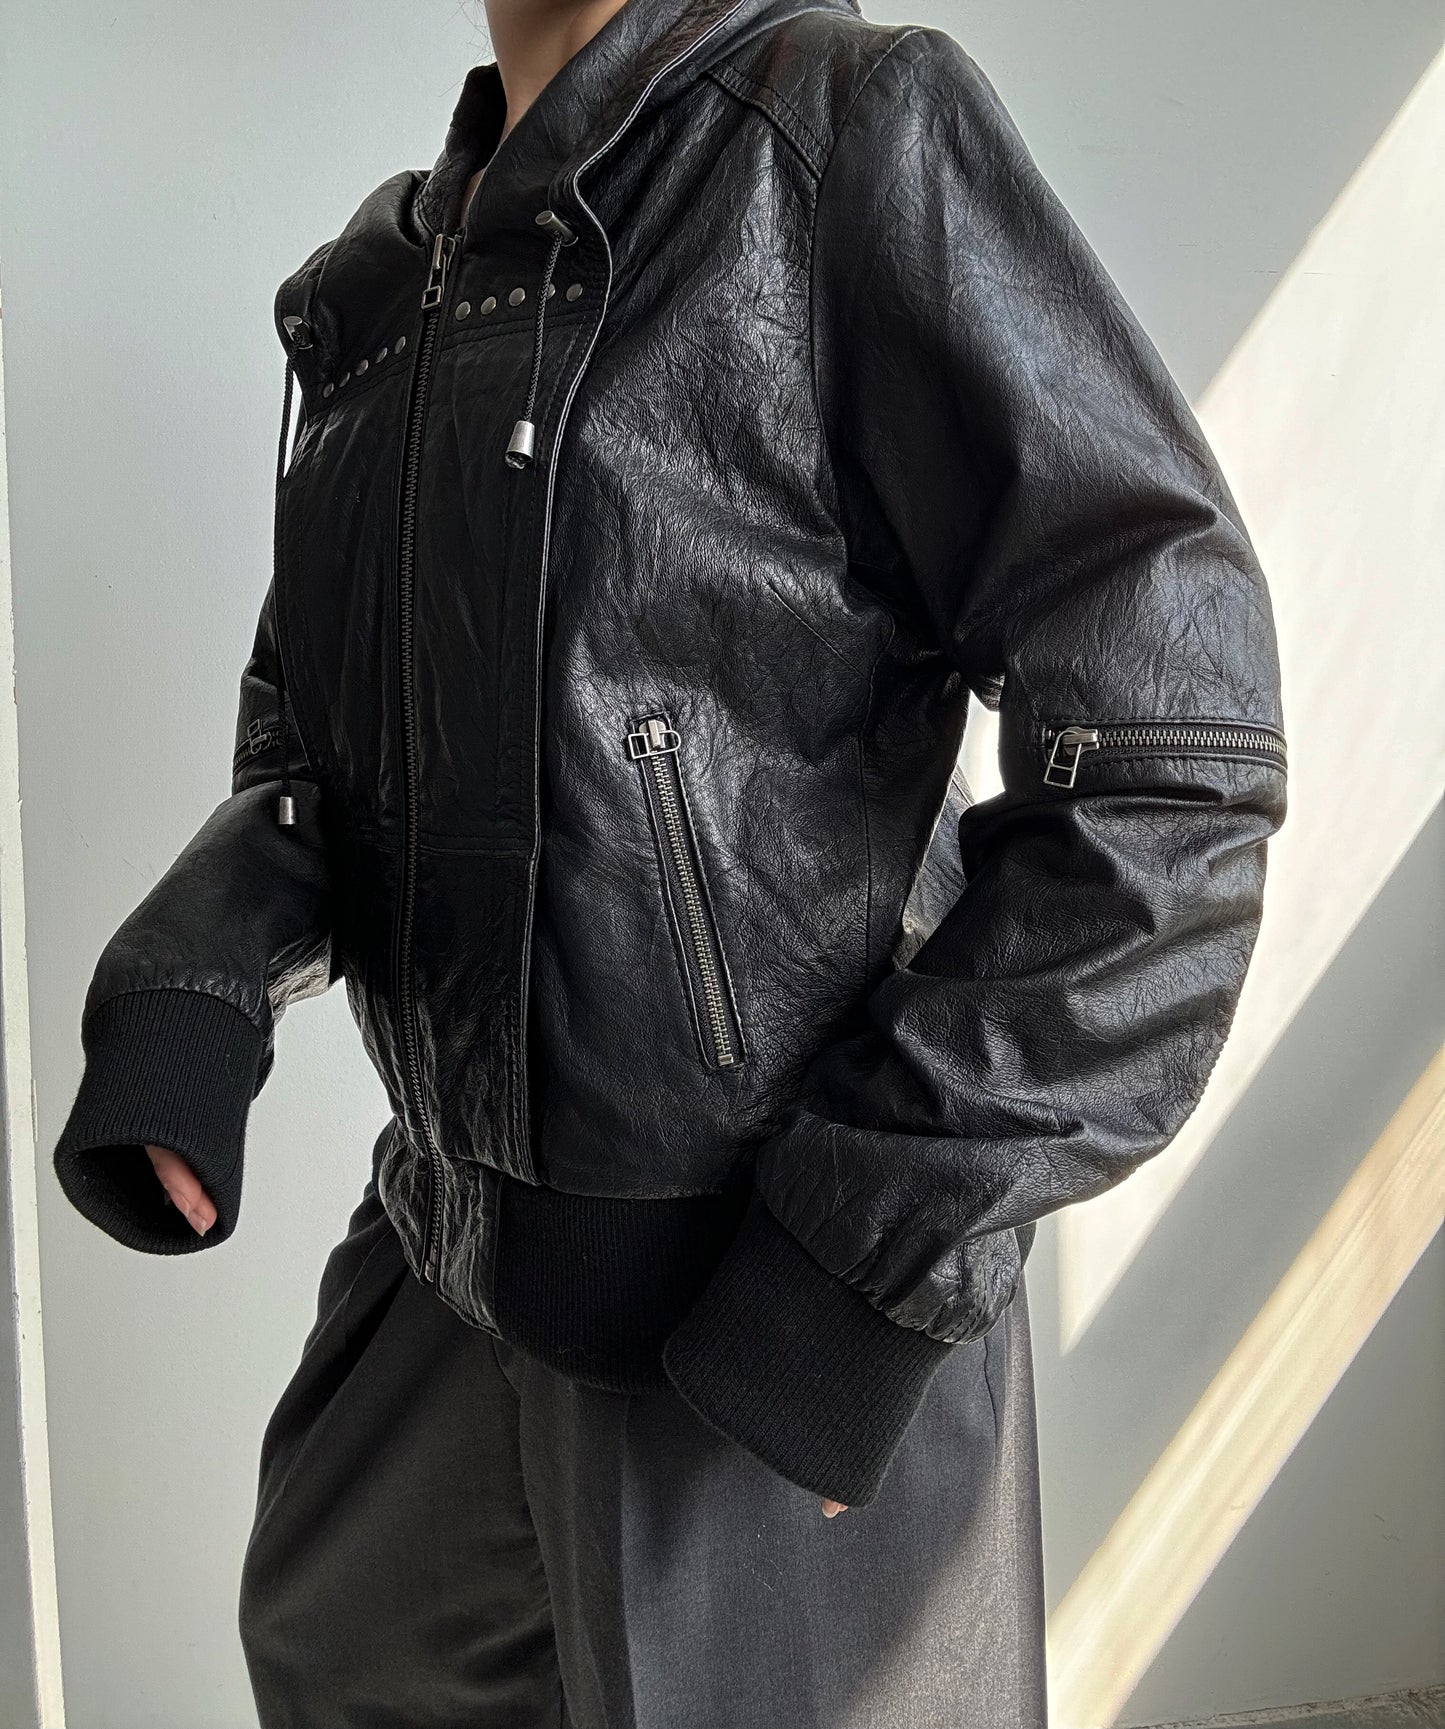 Danier Hooded Stud Leather Jacket